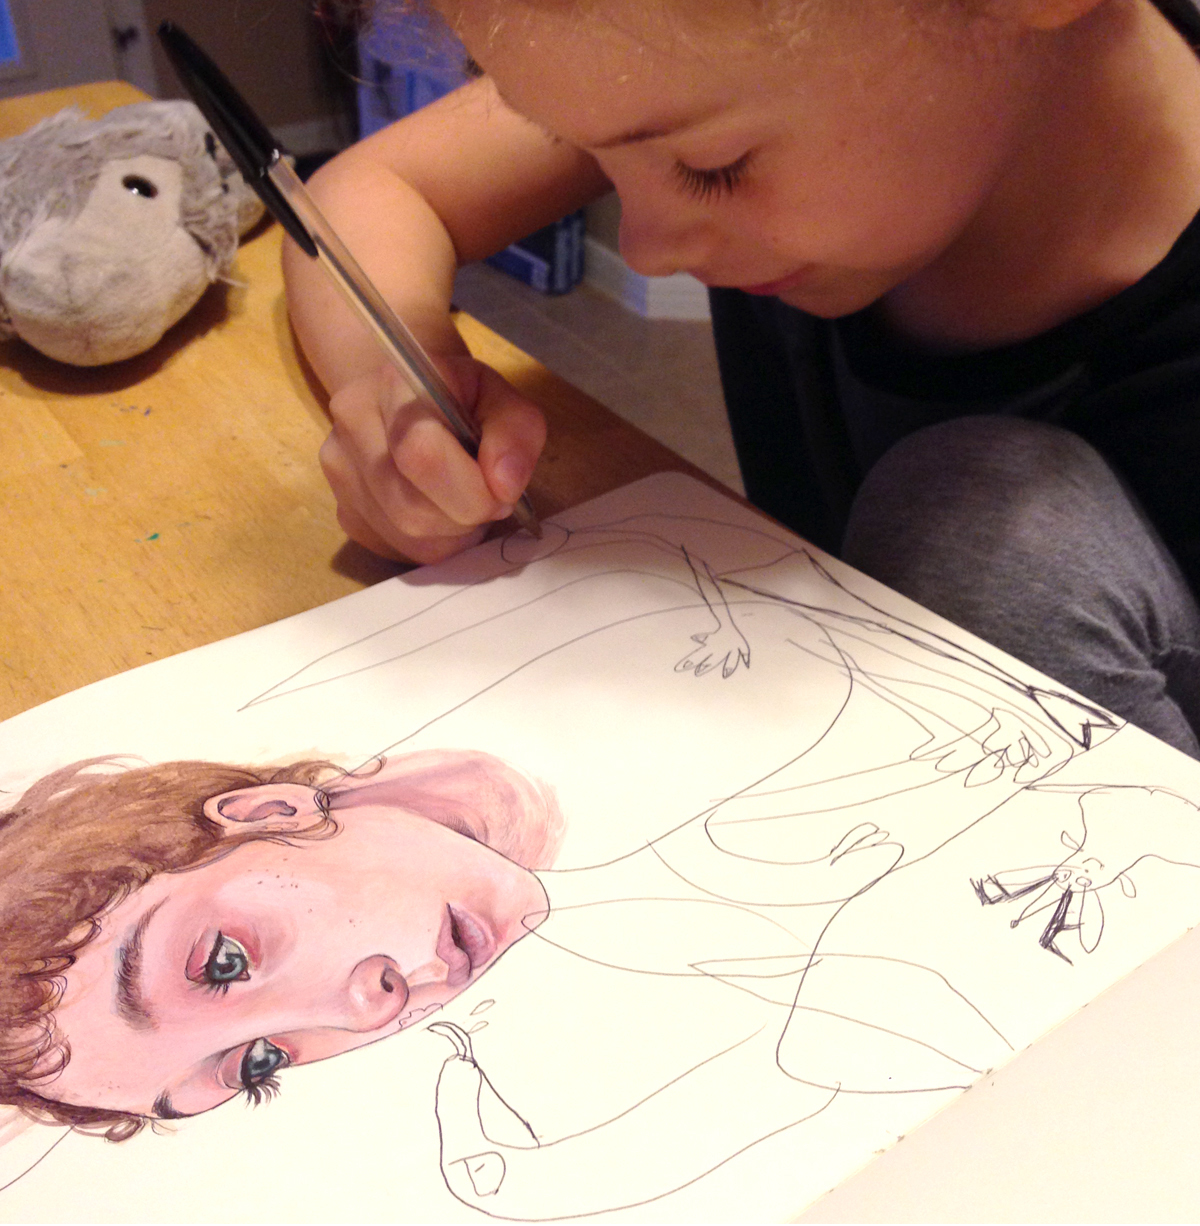 Mica's daugher, Myla Hendricks, adding finishing touches to Mica's illustration.